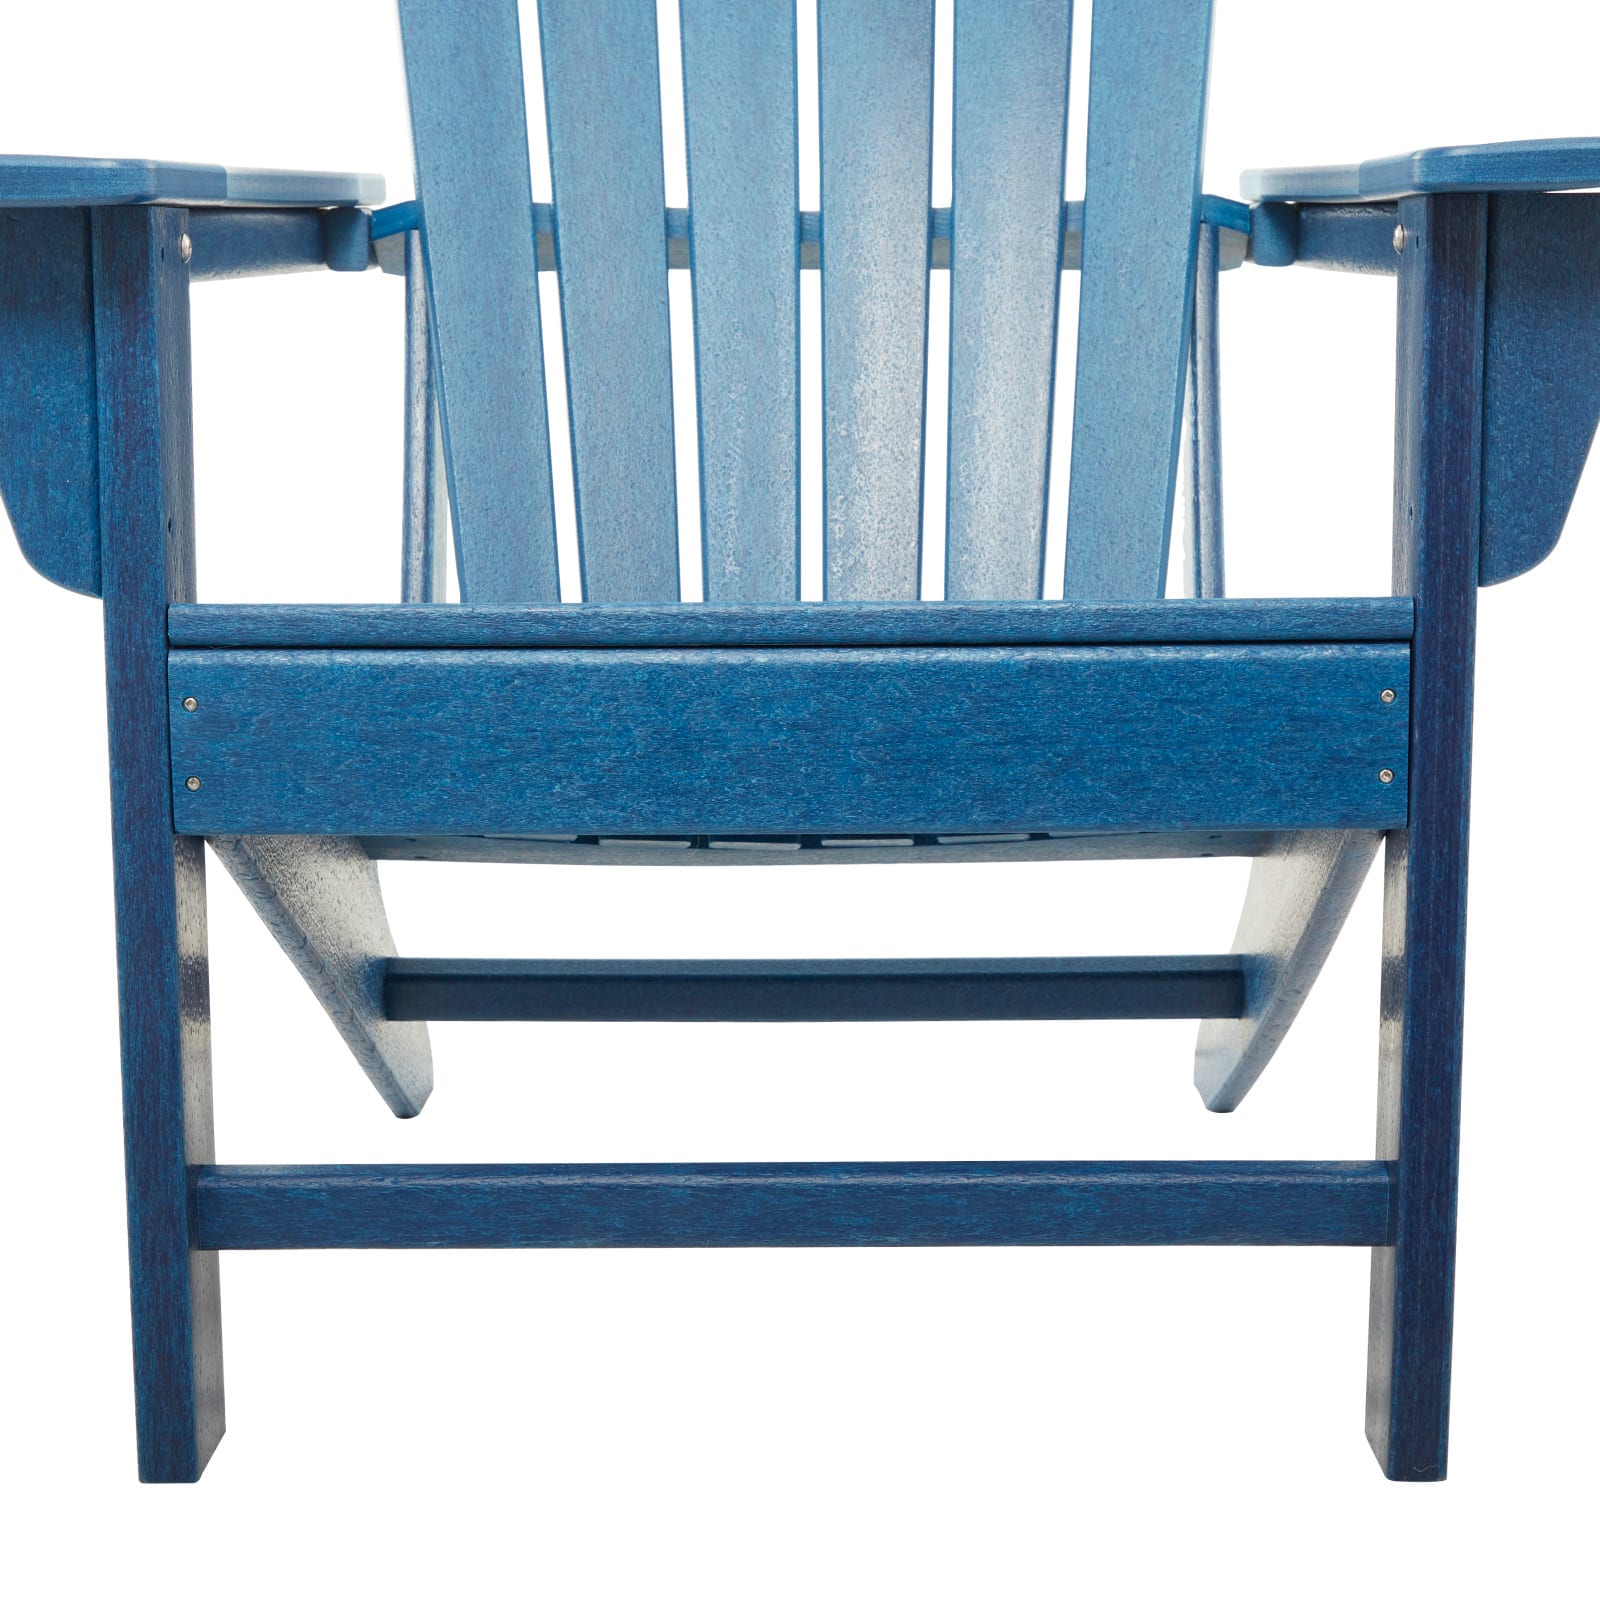 Blue Polyethylene Traditional Outdoor Adirondack Chair, 38&#x22; x 31&#x22; x 32&#x22;